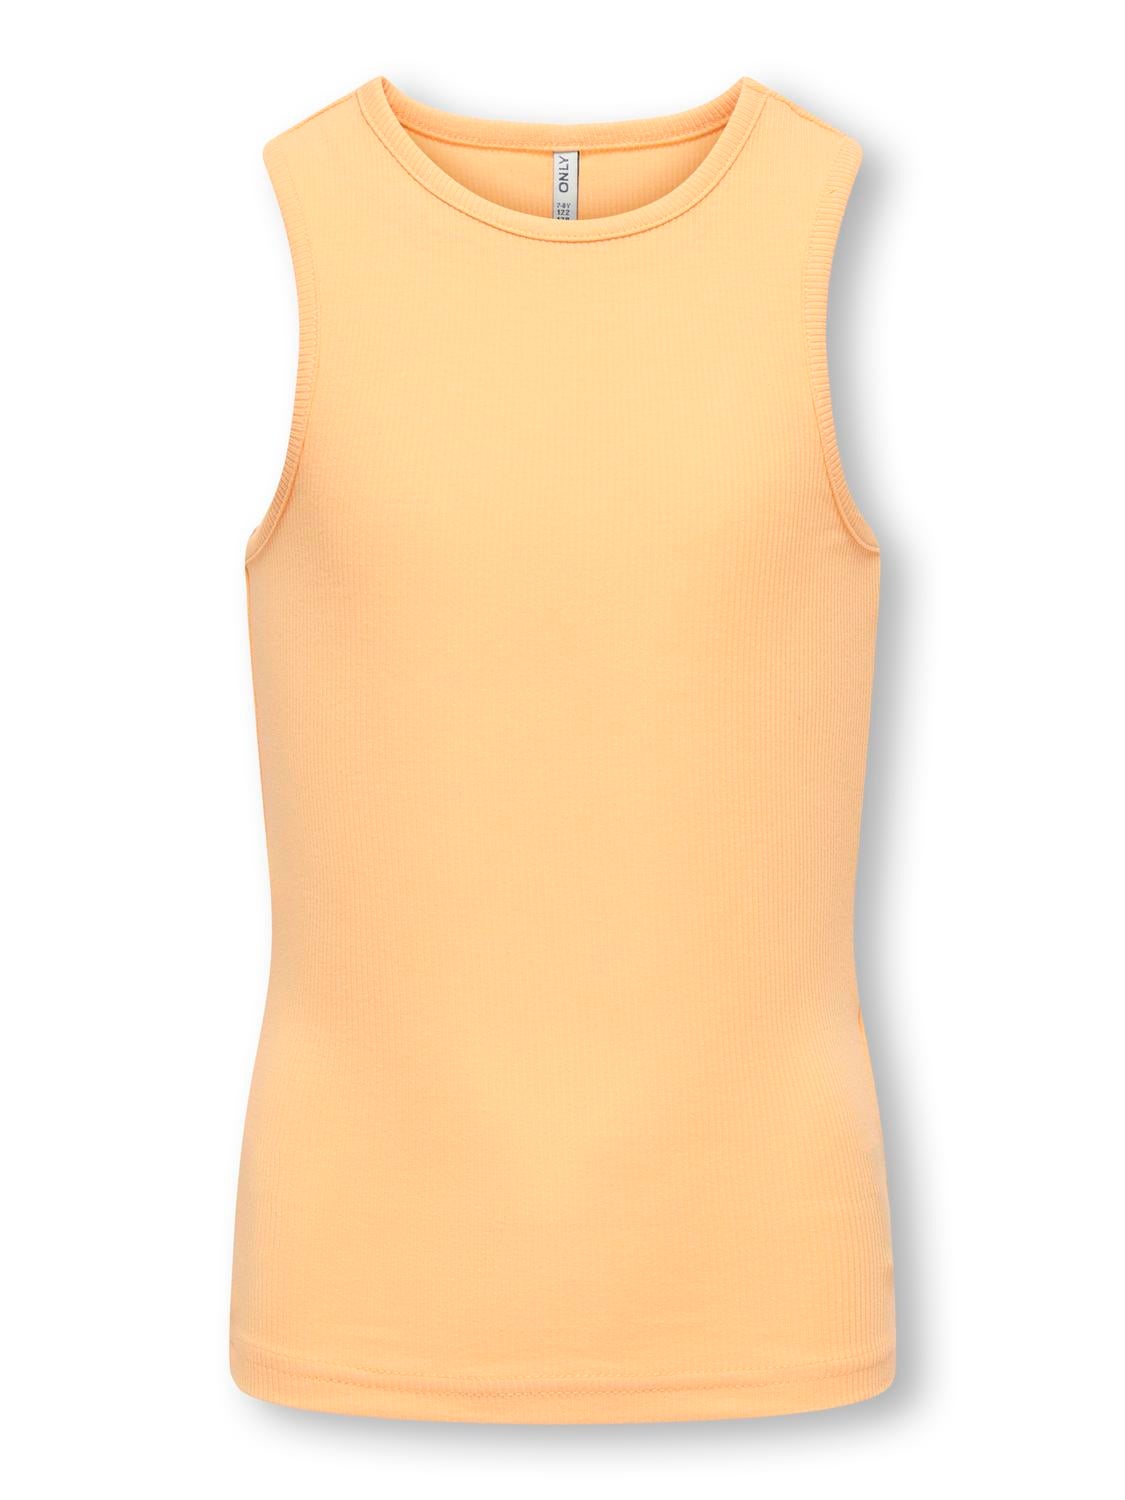 Camiseta de tirantes lisa con cuello de volantes naranja niña Naranja